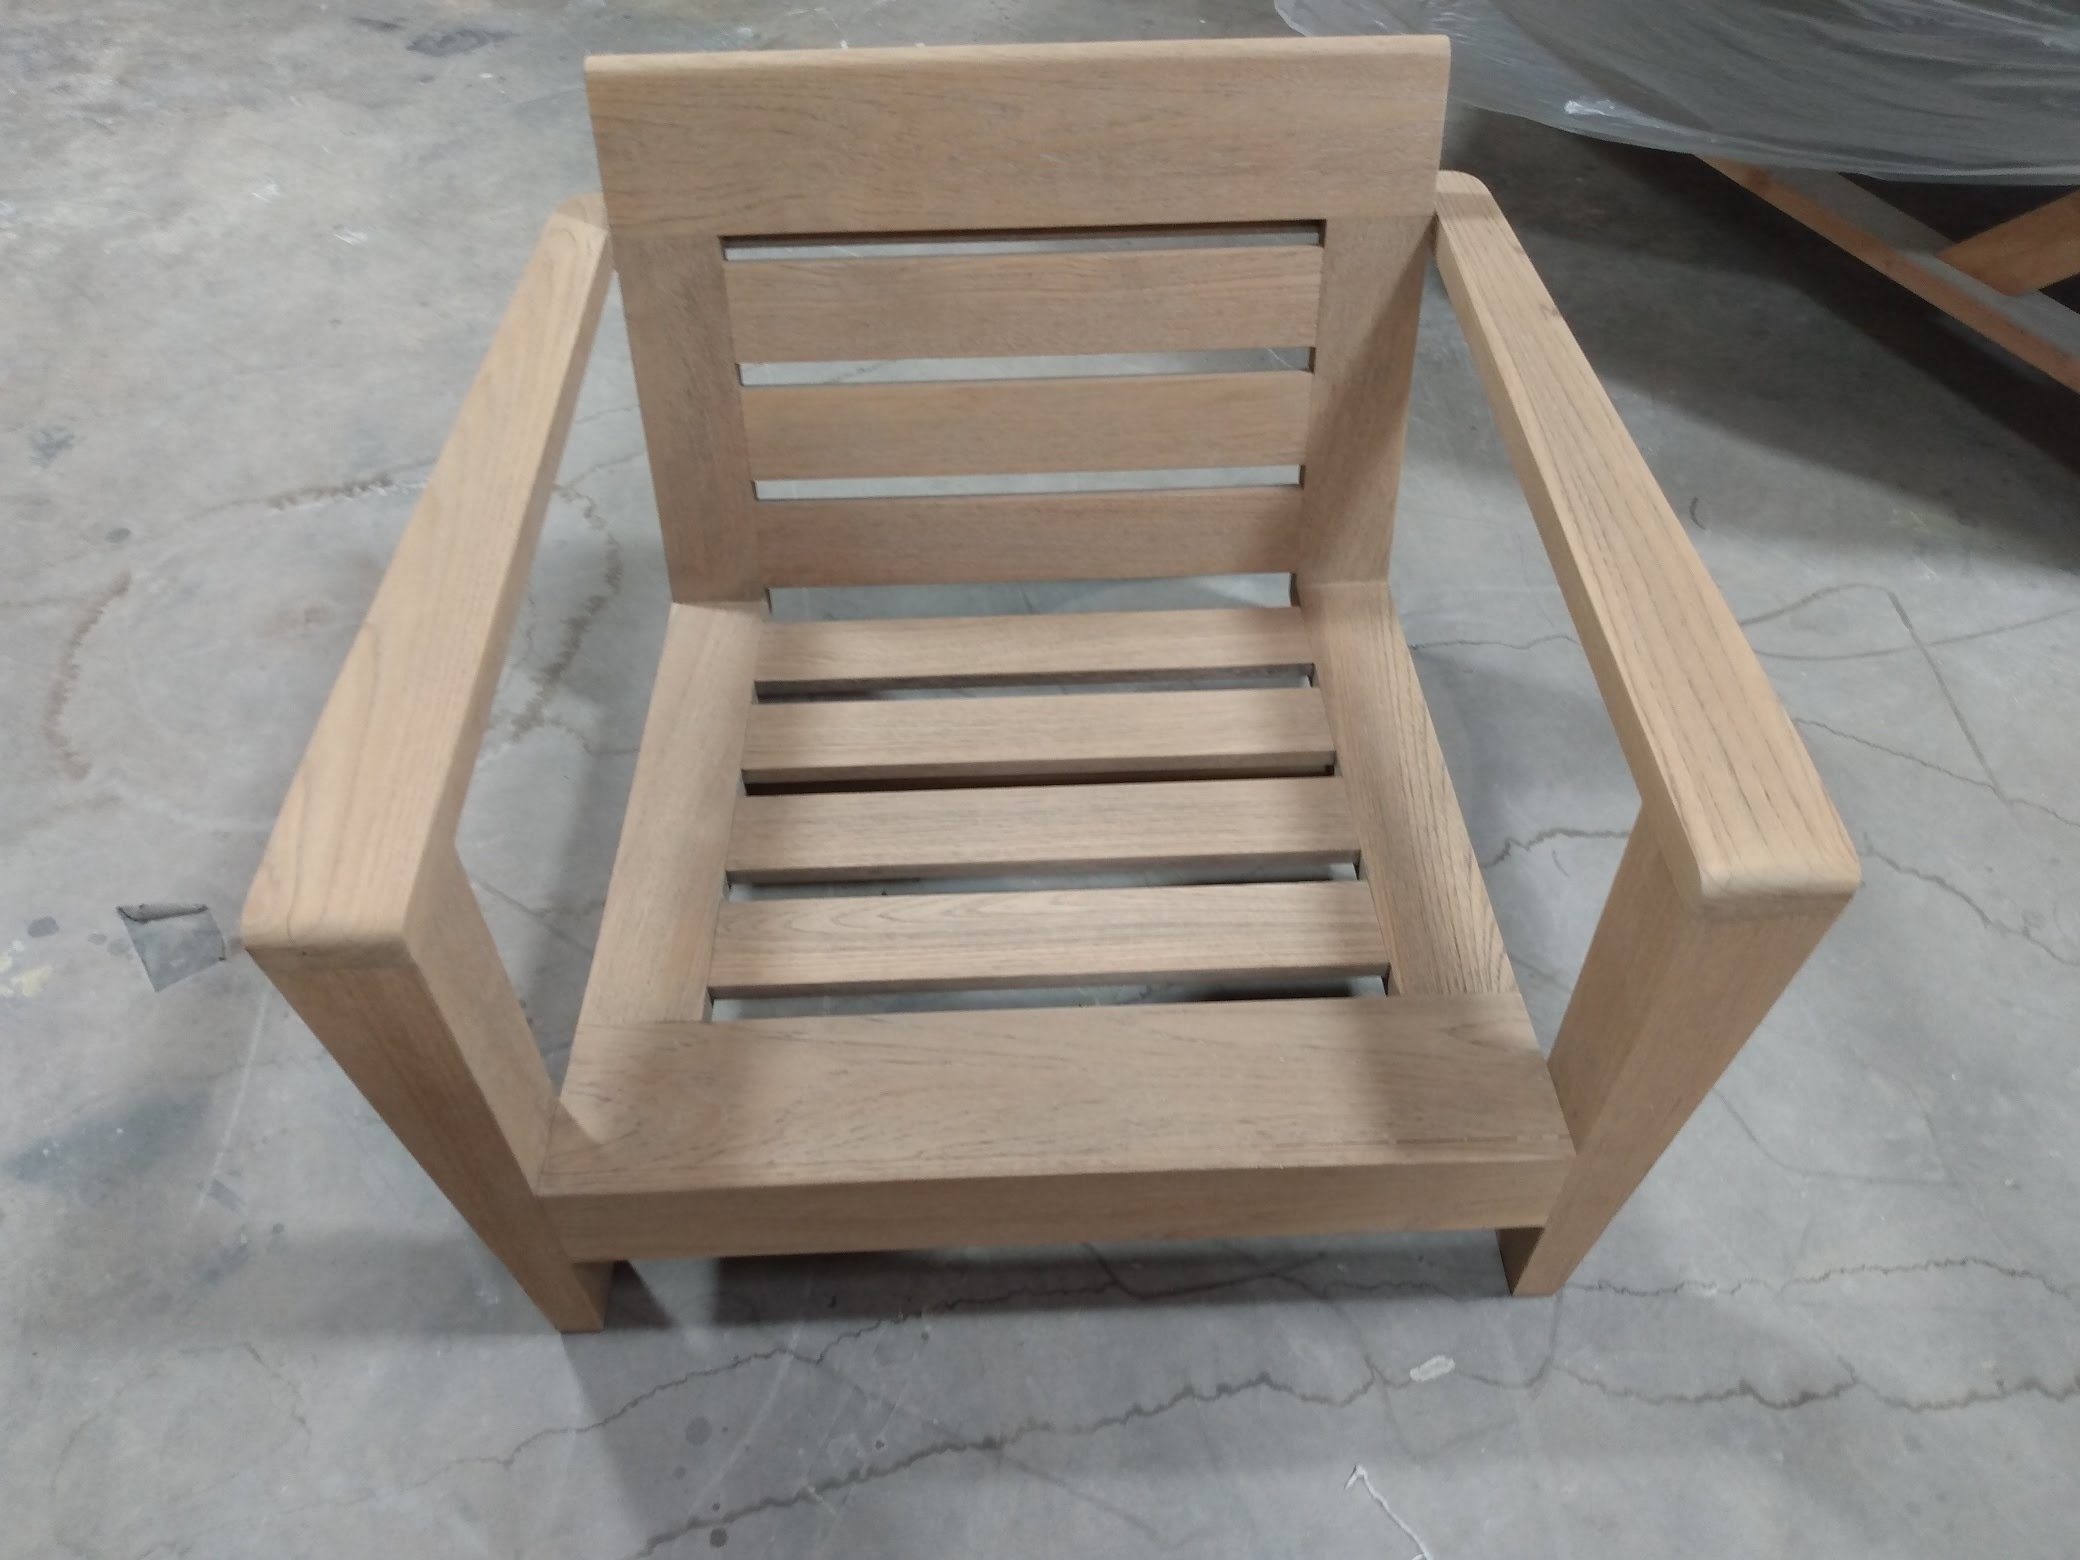 Outdoor Teak Furniture During Refinishing After Sanding